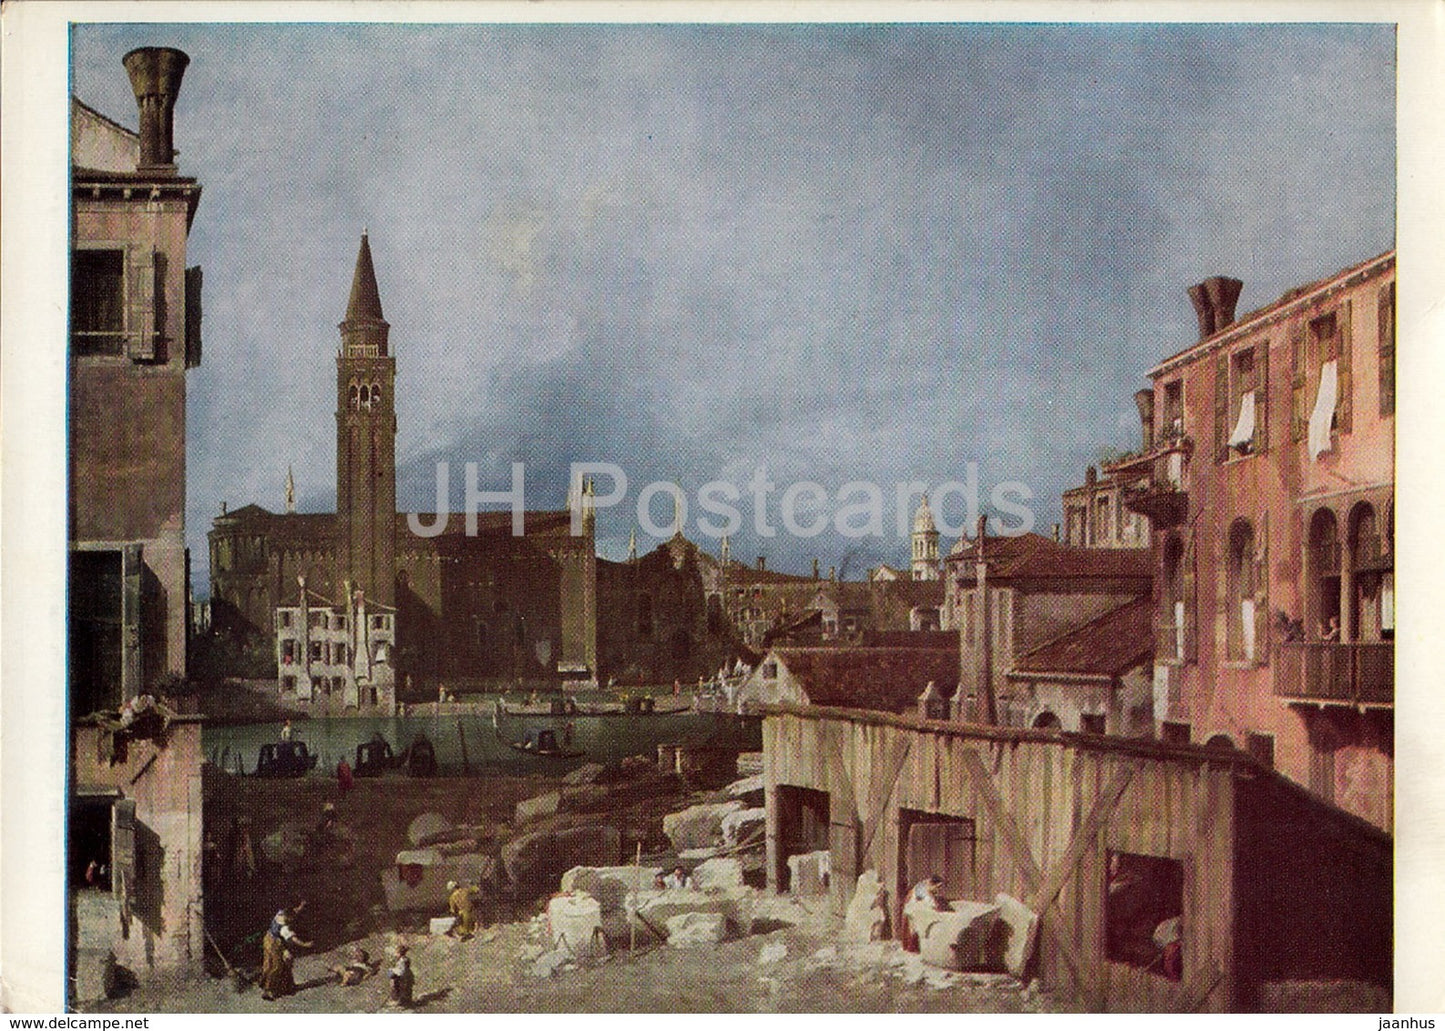 painting by Canaletto - Venice - Campo S. Vidal and S. Maria della Carita - Italian art - England - unused - JH Postcards